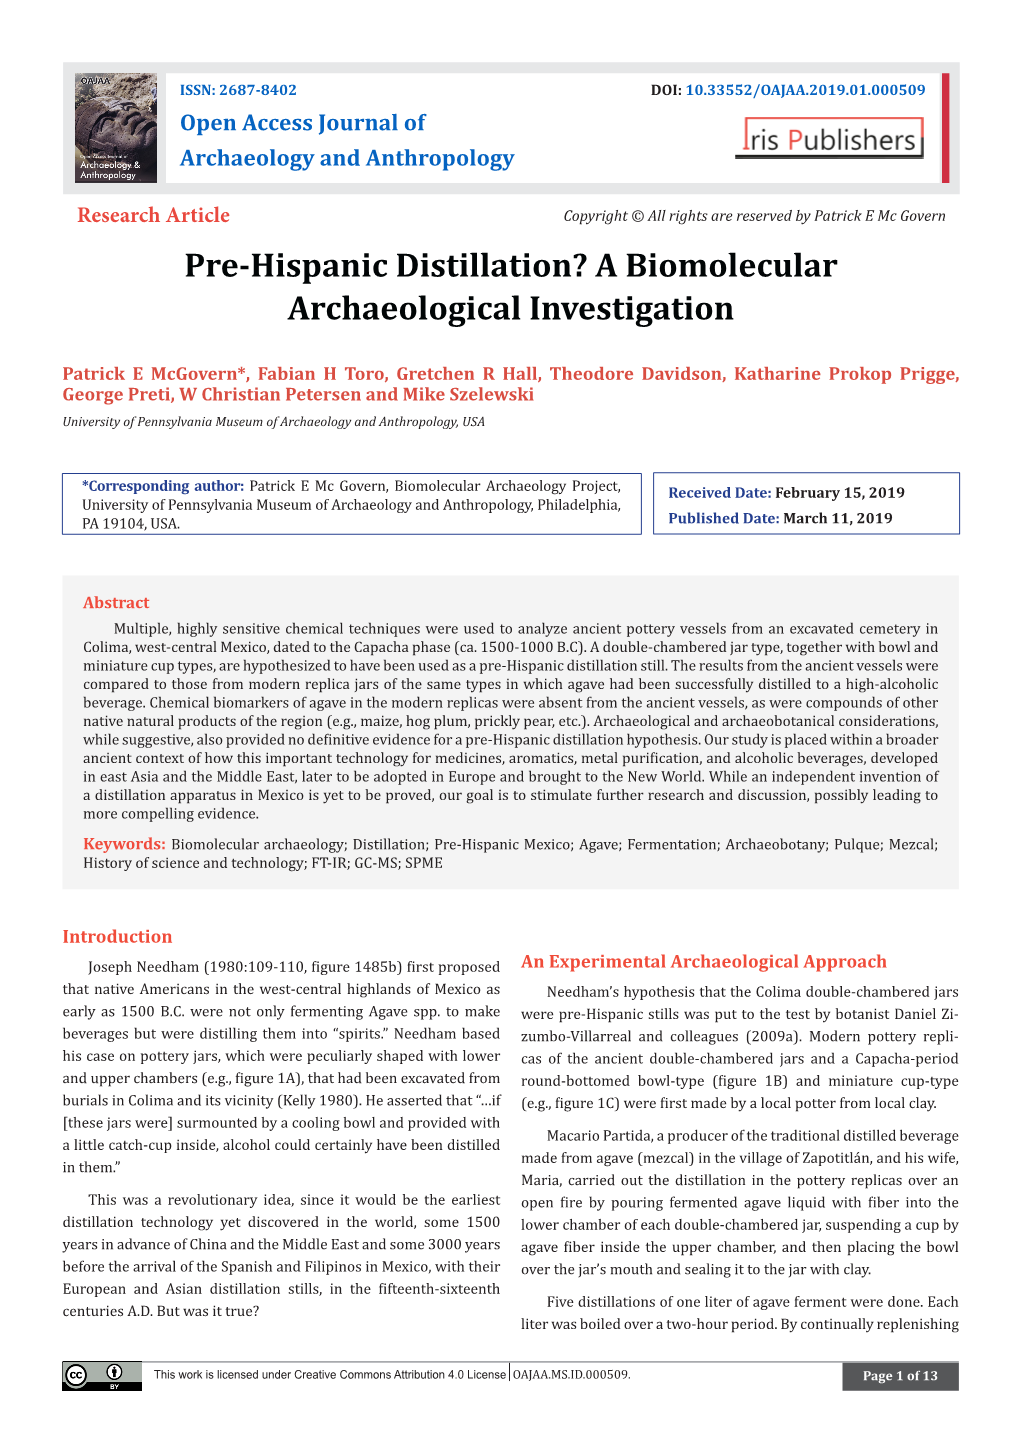 Pre-Hispanic Distillation? a Biomolecular Archaeological Investigation